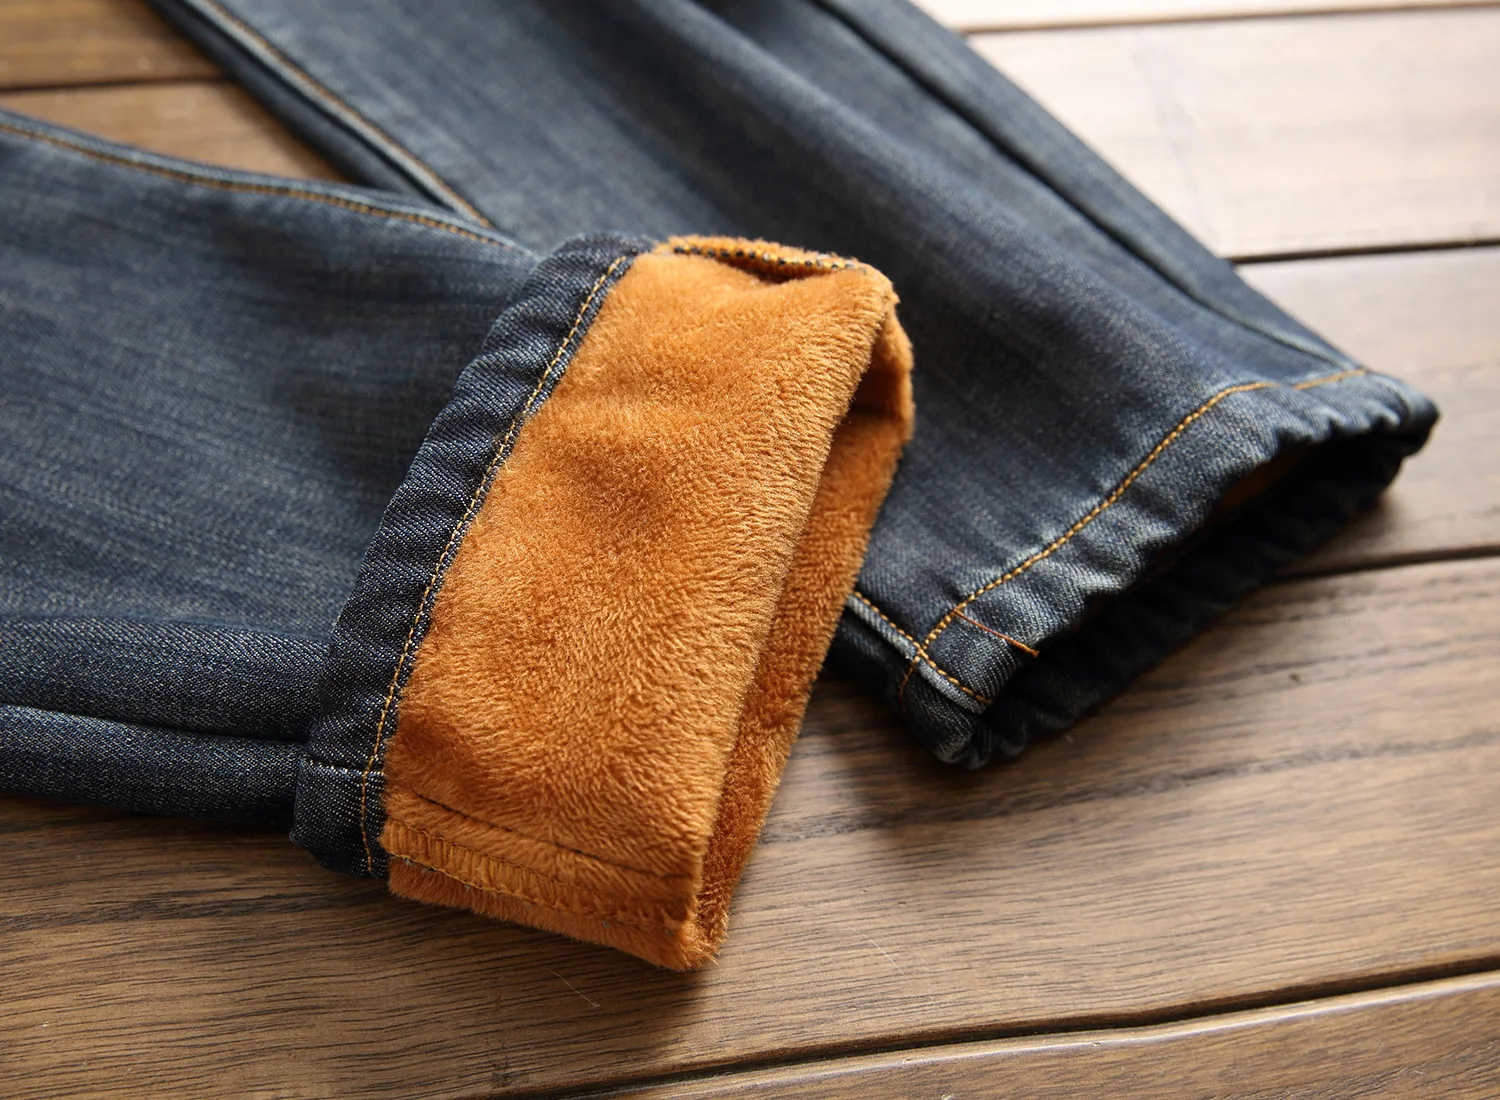 Denim Keep Warm Designer Hole Jeans Men High Quality Ripped for Men Size 38 40 2019 Autumn Winter Plus Velvet HIP HOP Streetwear